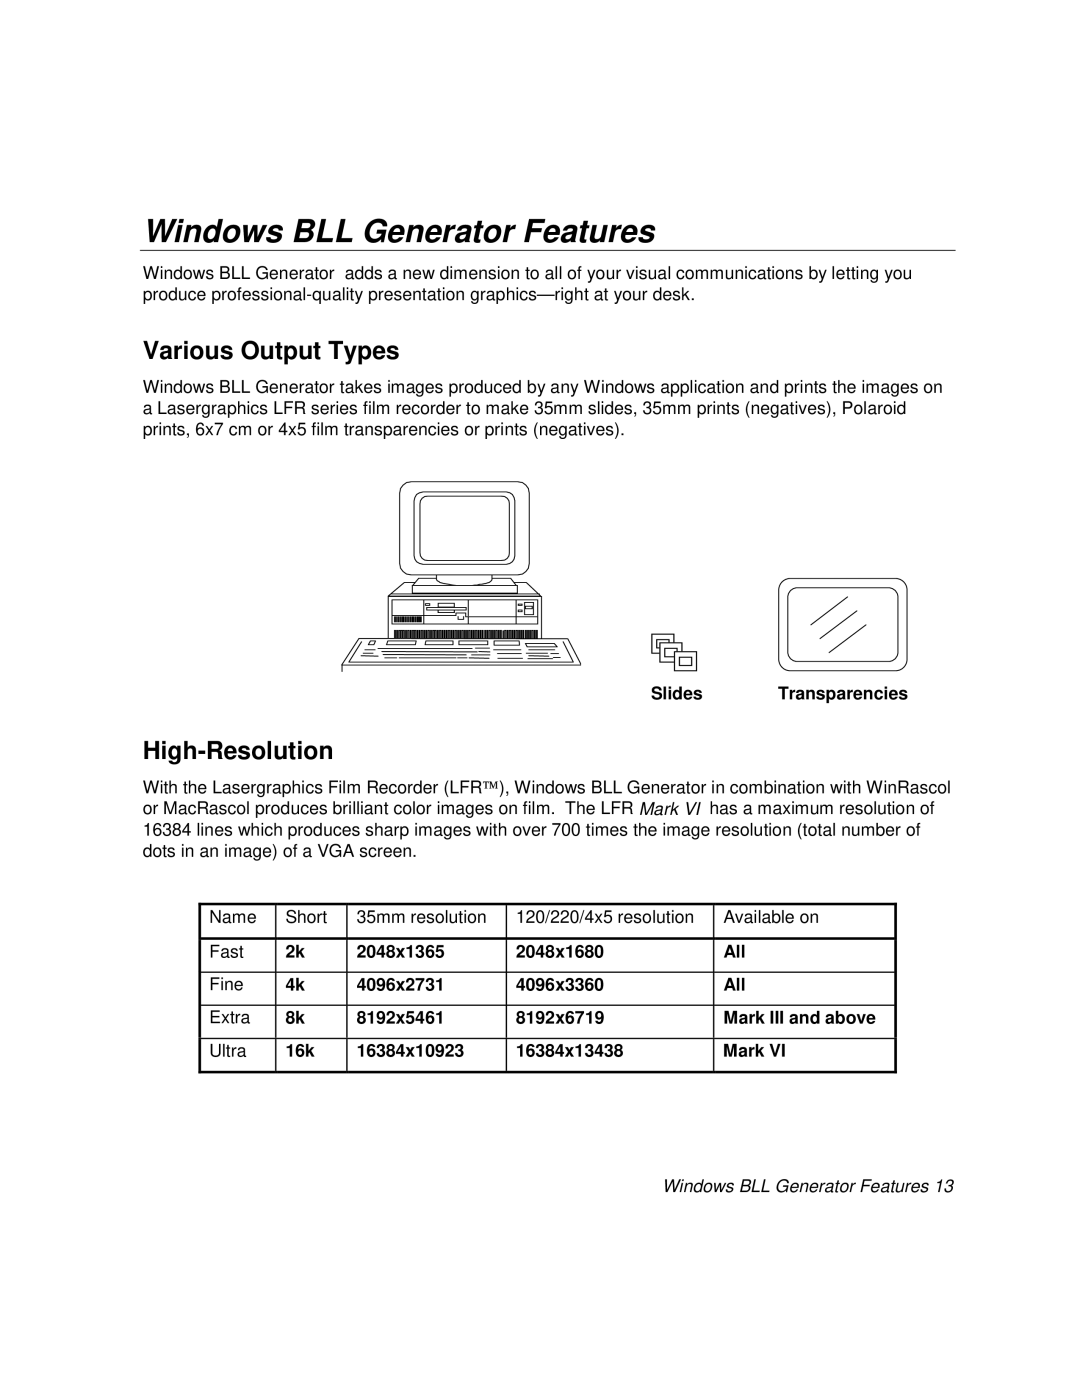 Polaroid Windows BLL Generator Features, Various Output Types, High-Resolution, Slides Transparencies, Name, Short 